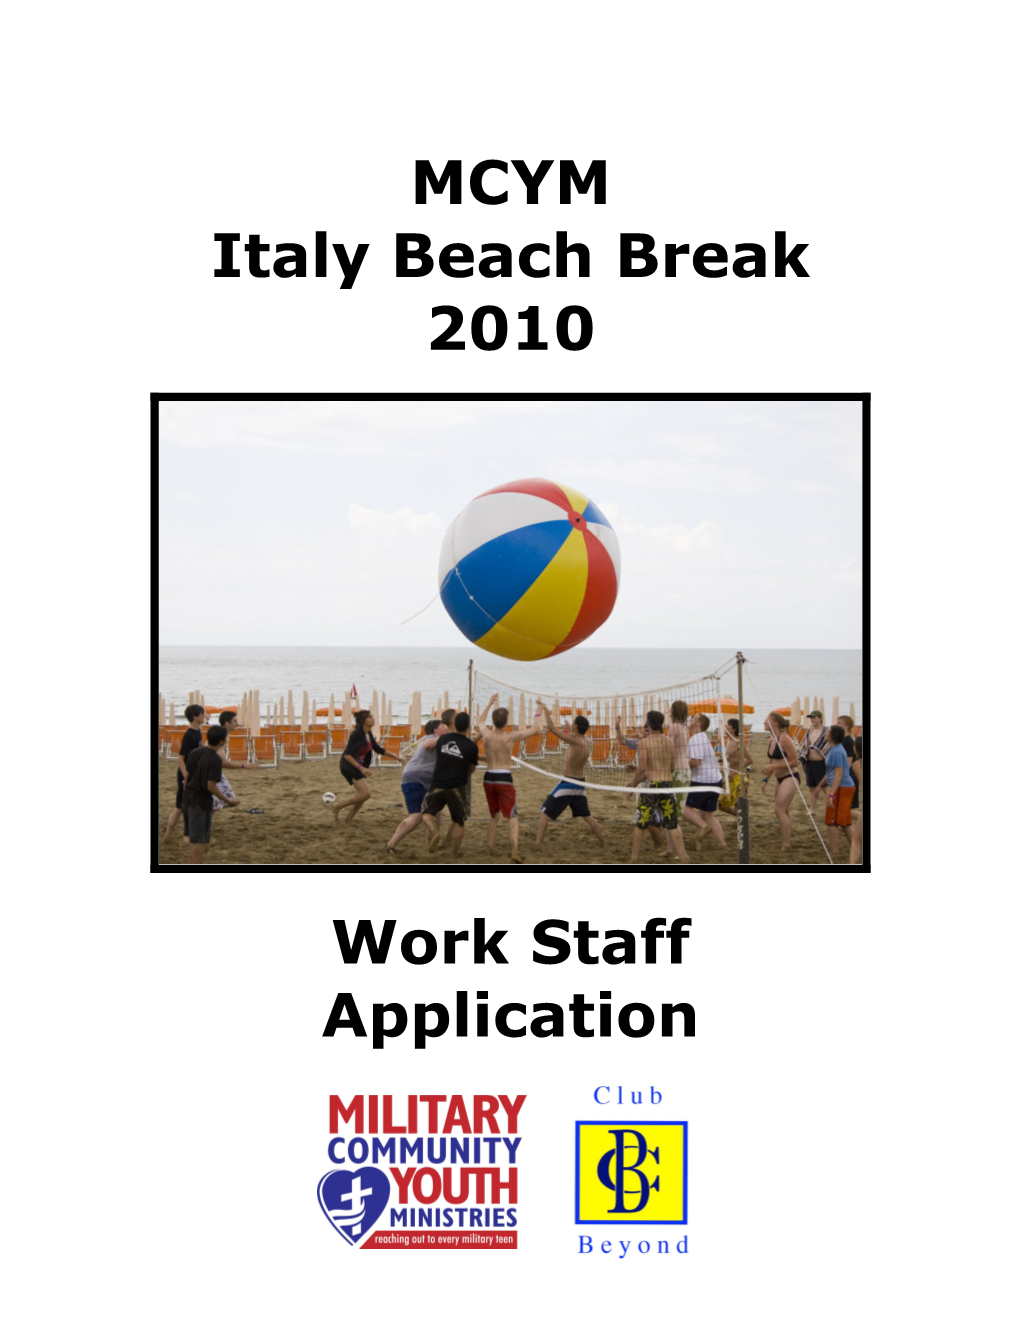 MCYM Italy Beach Break 2005